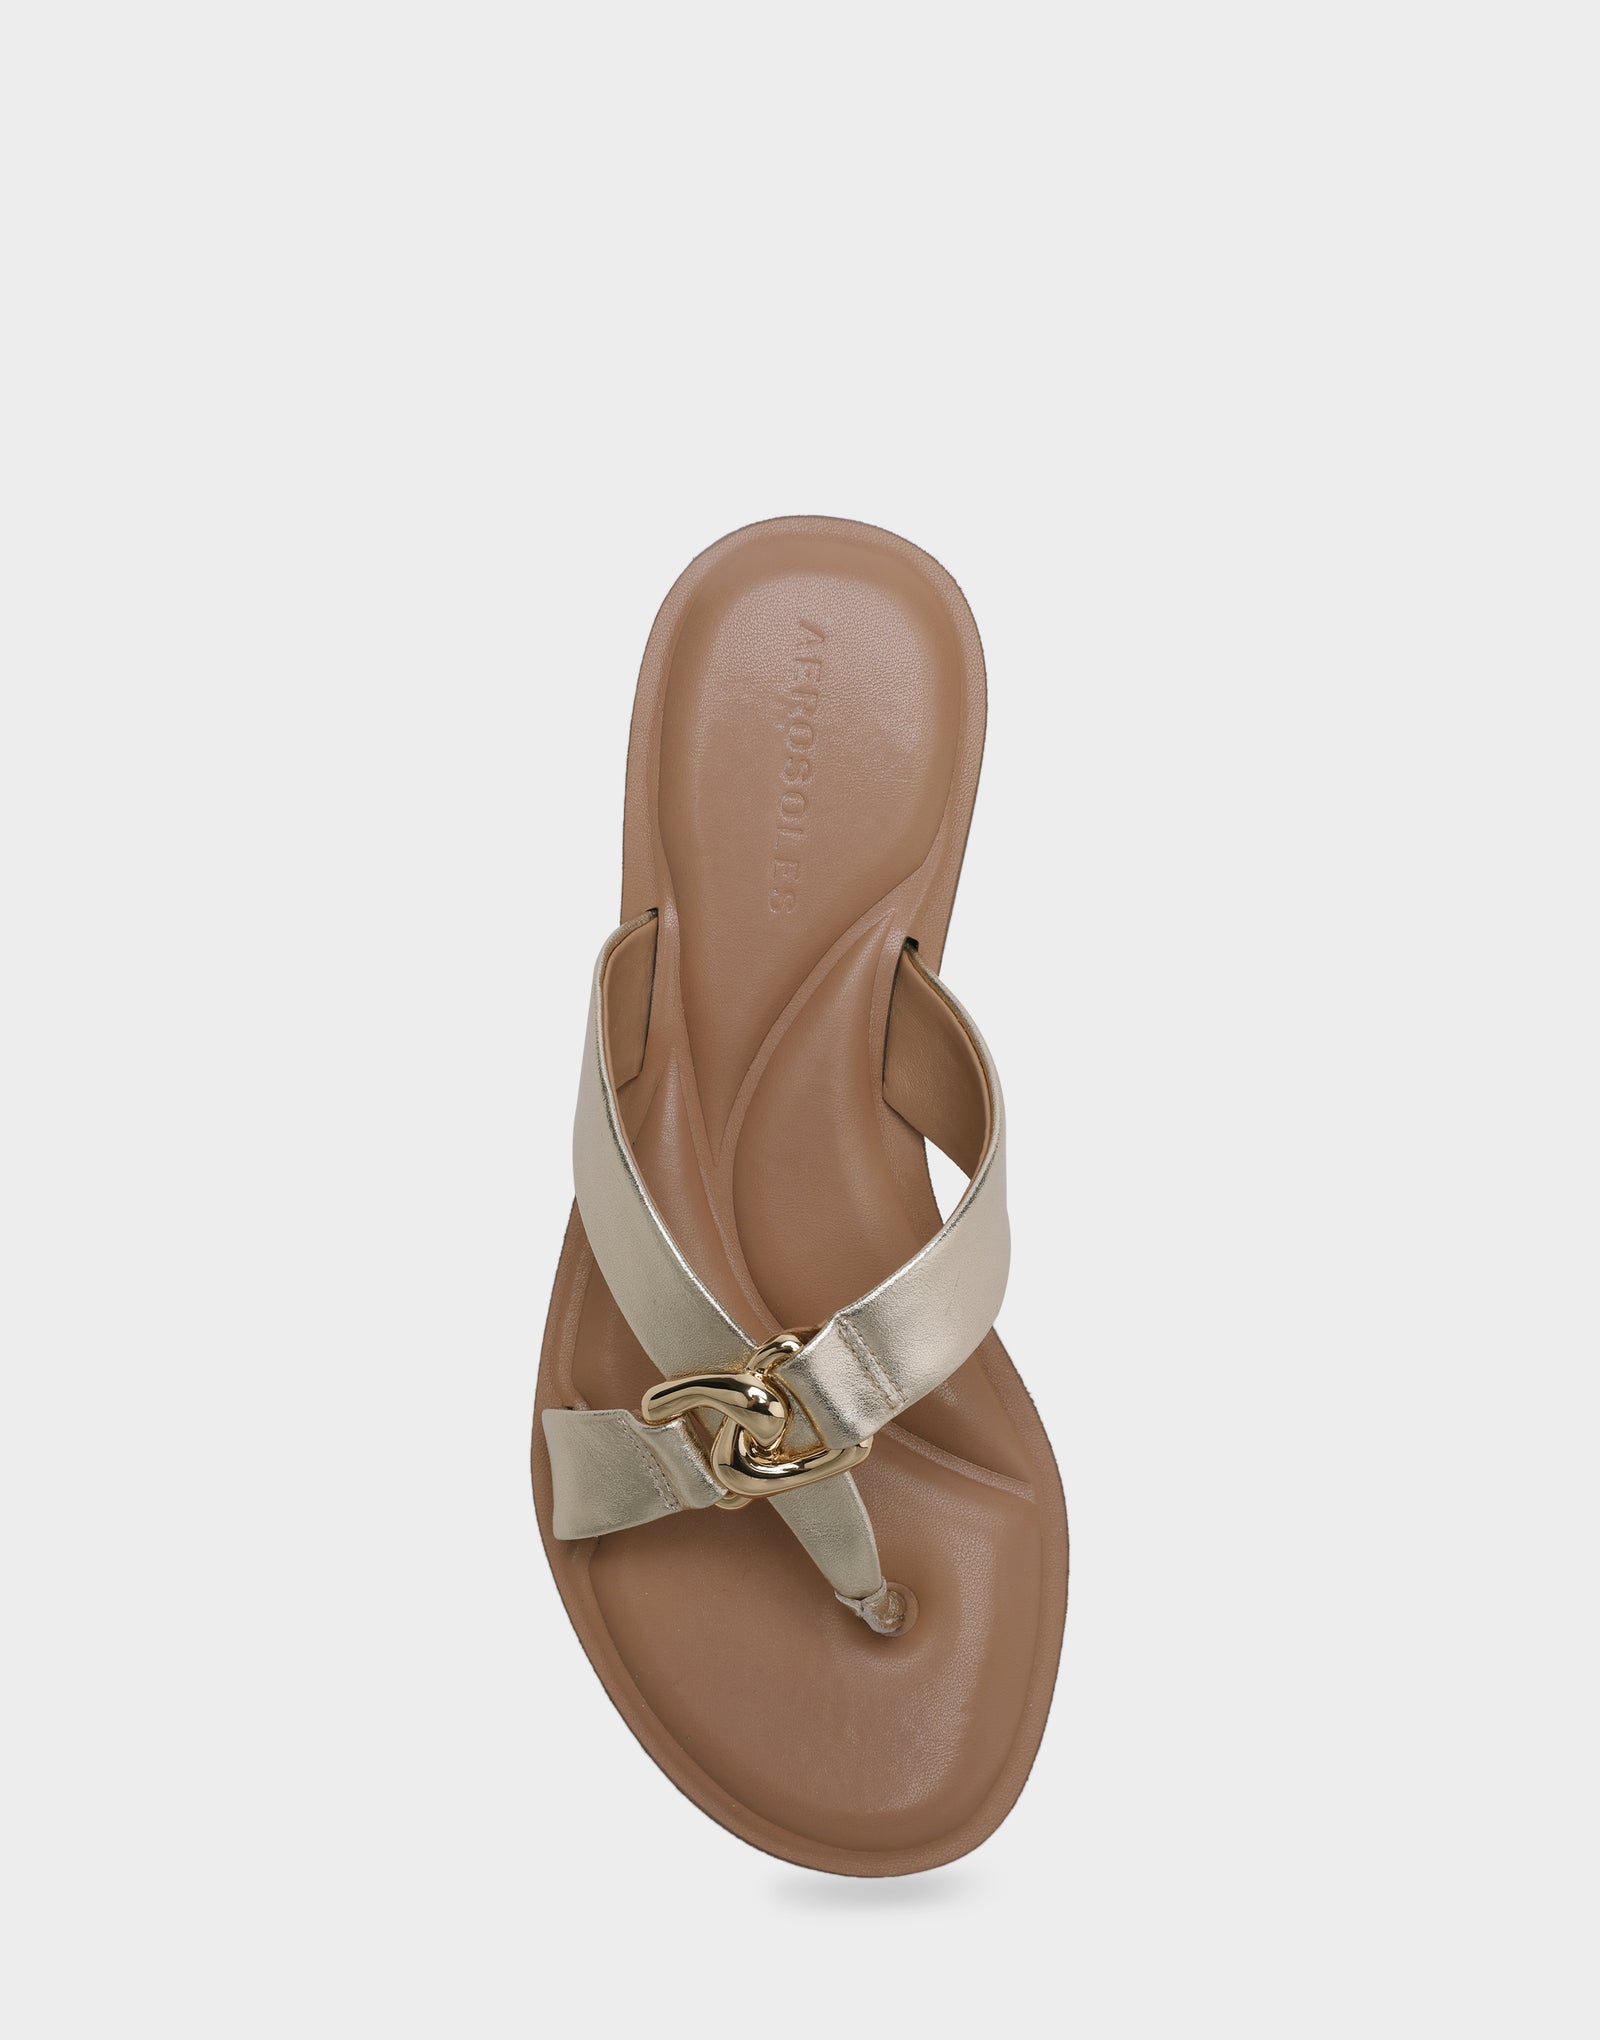 Women's Sandal in Soft Gold